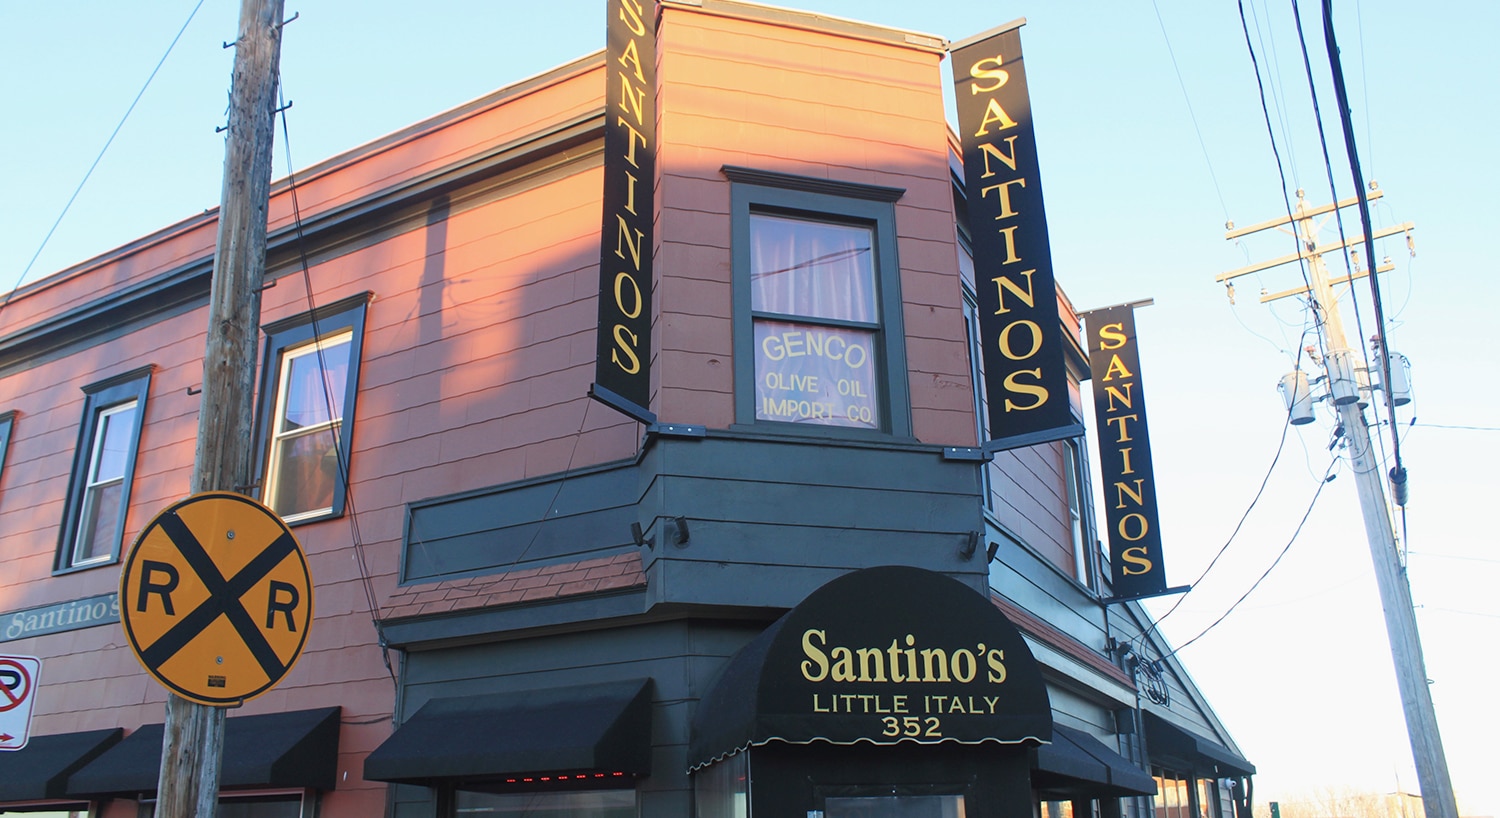 Santino's Little Italy restaurant